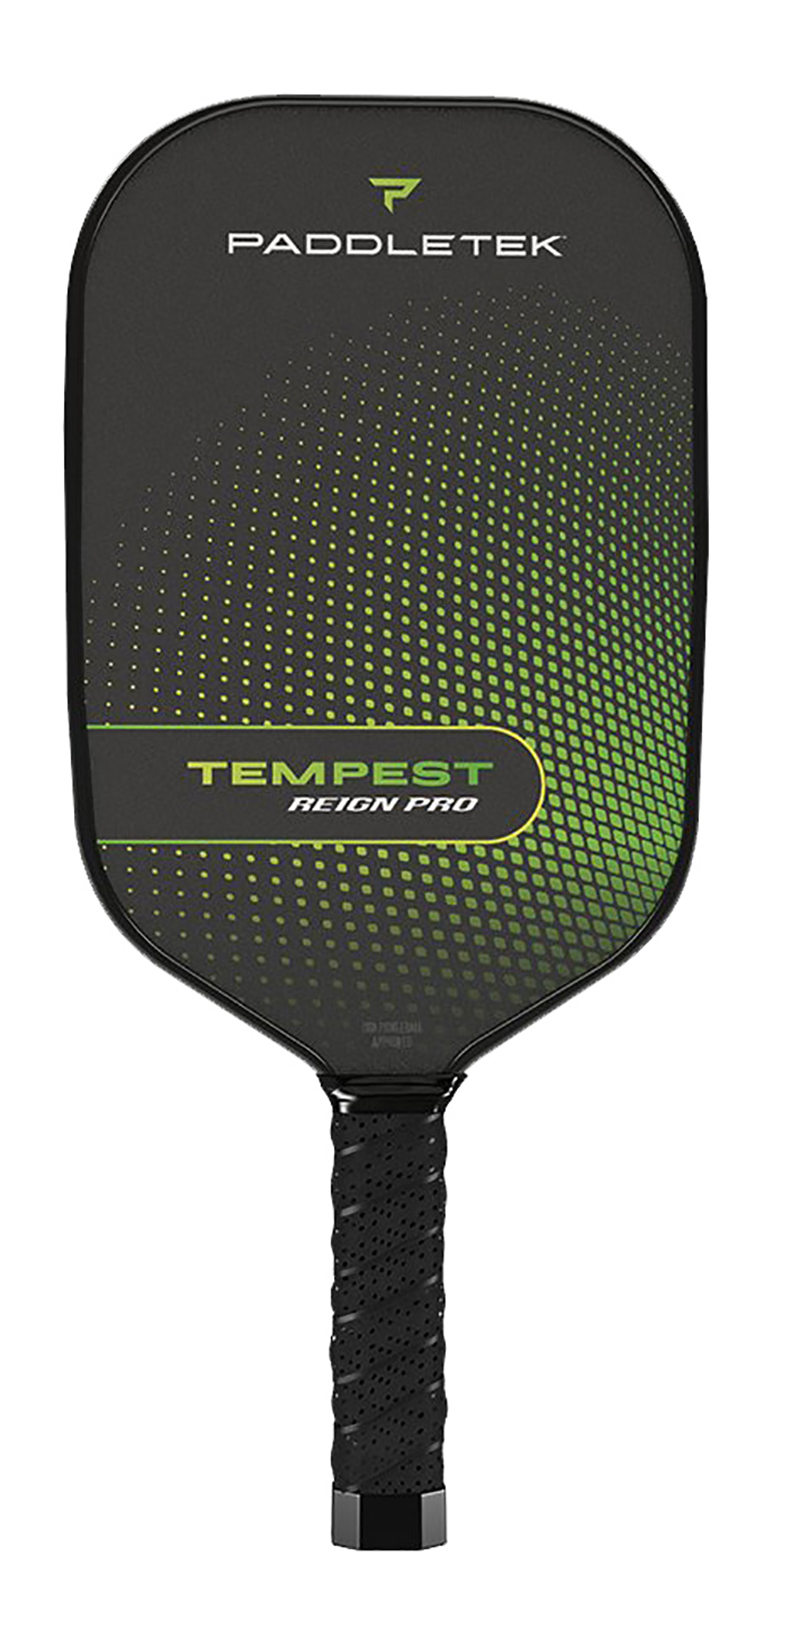 Paddletek Tempest Reign Pro Pickleball Paddle (Standard Grip) (Green)